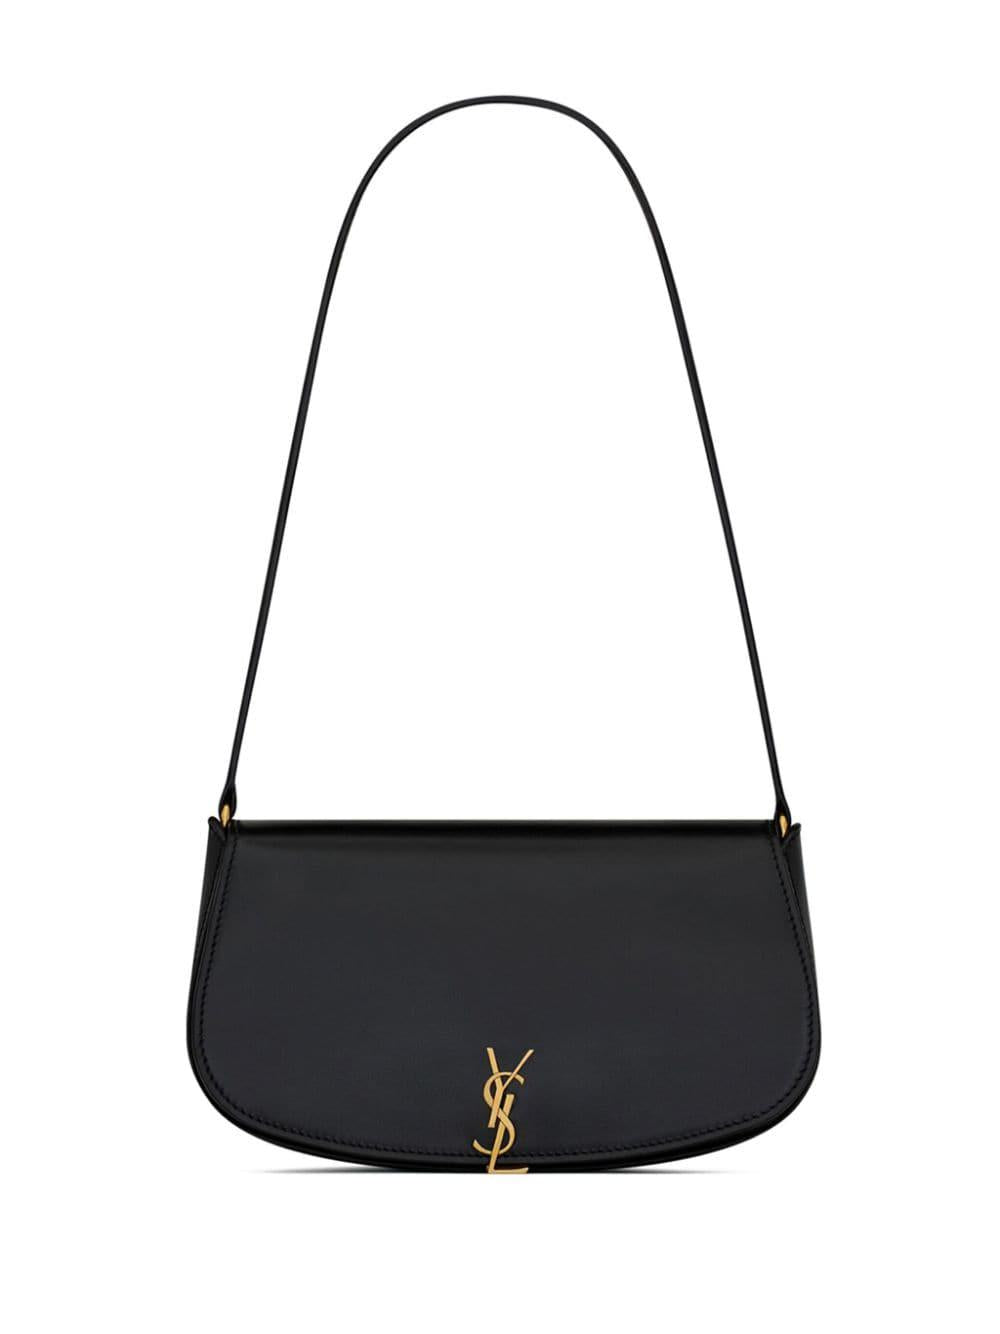 SAINT LAURENT Classic Black Leather Hobo Handbag for Women - FW24 Collection